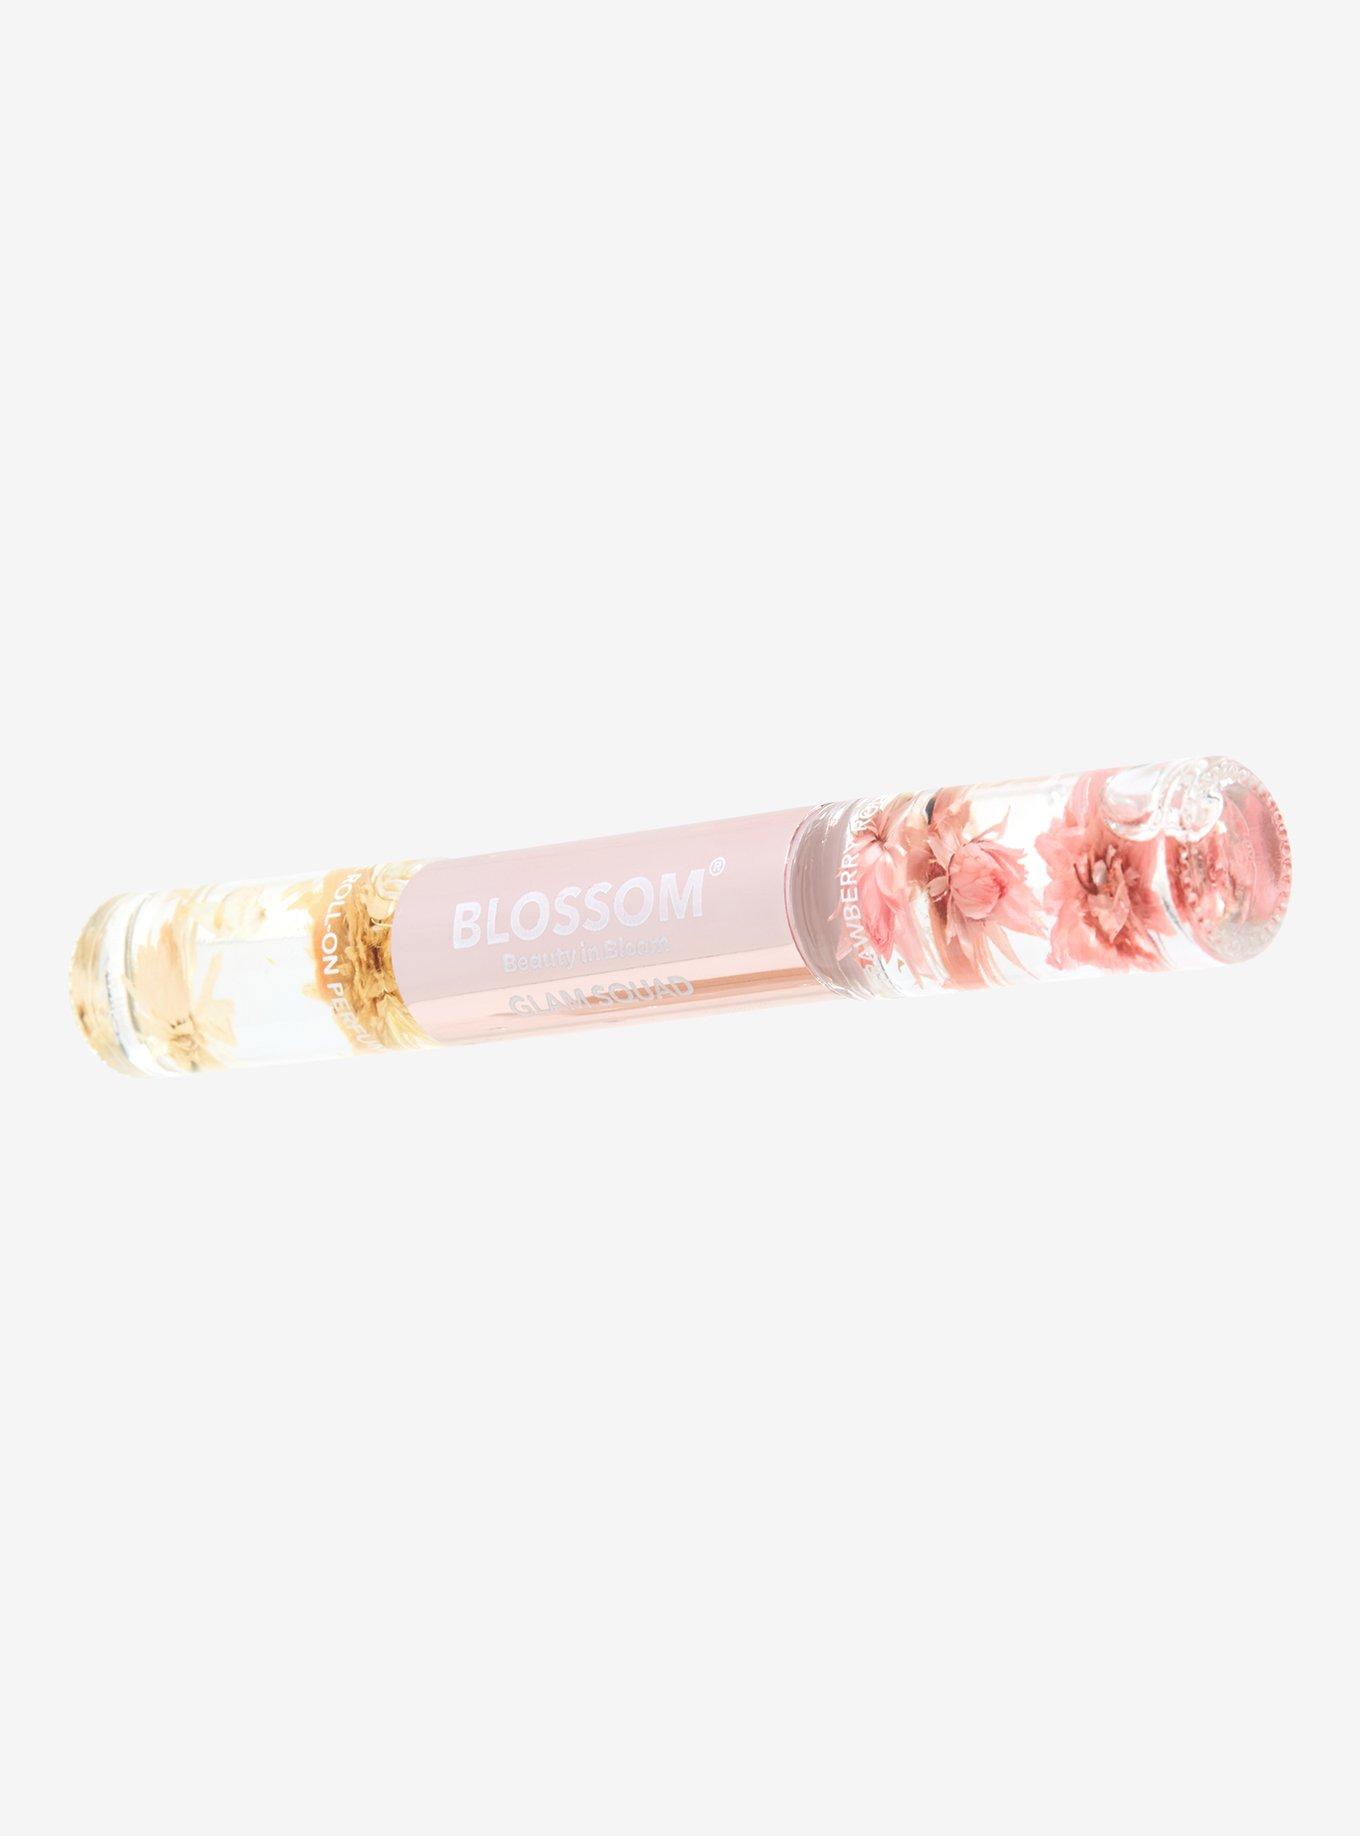 Blossom Beauty Roll On Perfume Oil